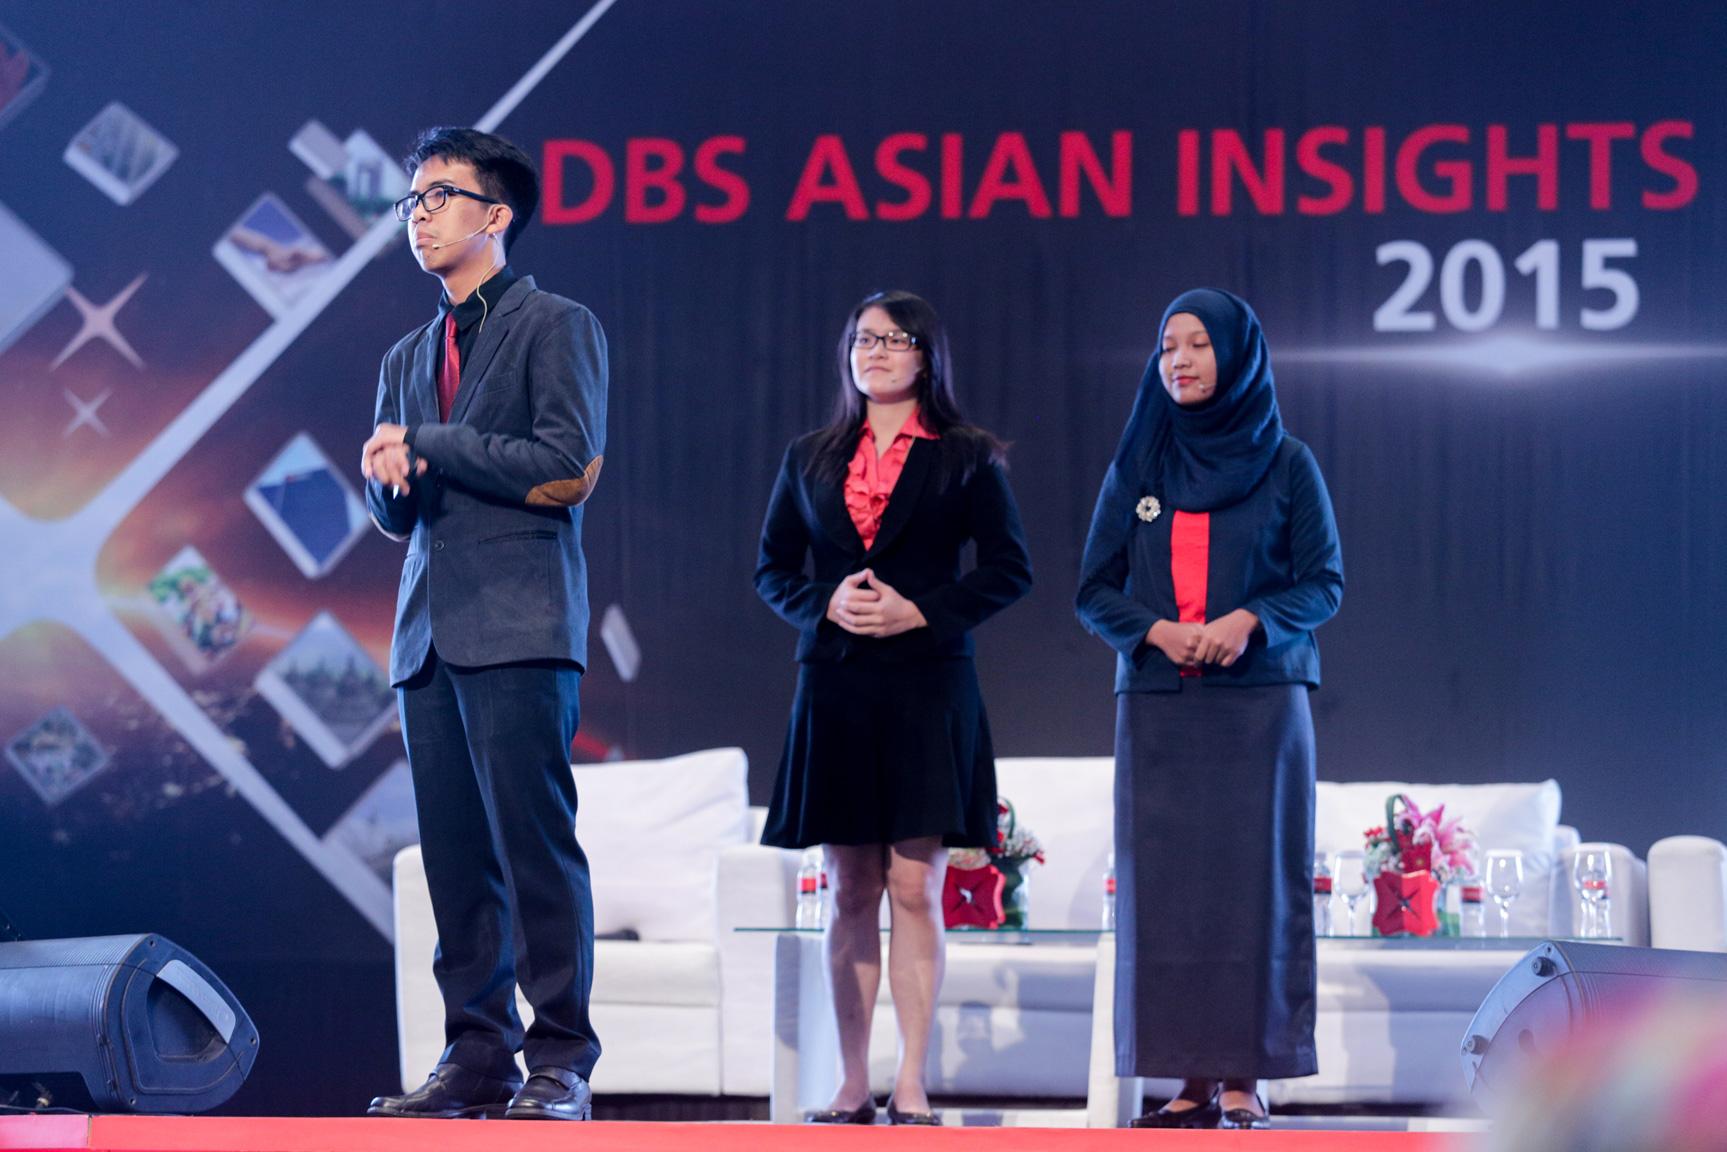 \nAkbar Syahid dari Institute Teknologi Bandung, juara ke 3 DBS Young Economist Stand-Up beraksi di hadapan peserta DBS Asian Insight Conference 2015 di Jakarta.